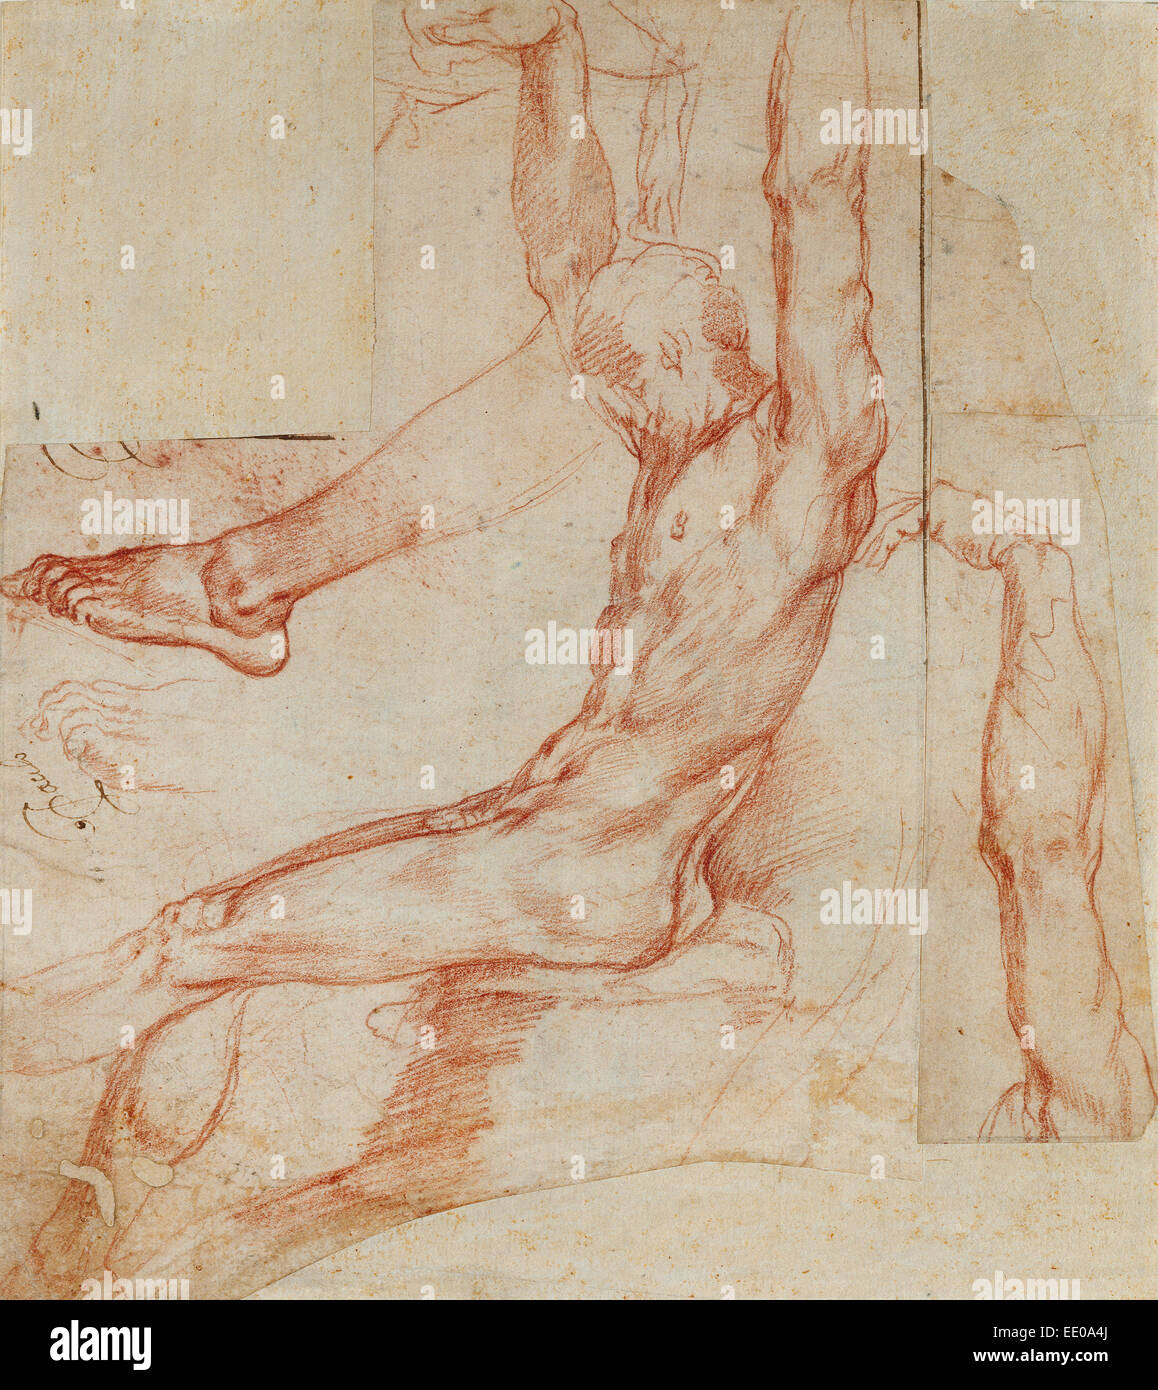 Étude d'un homme avec diverses ébauches (recto), de l'étude d'un homme drapé de la jambe (verso), Polidoro da Caravaggio (Polidoro Caldara) Banque D'Images